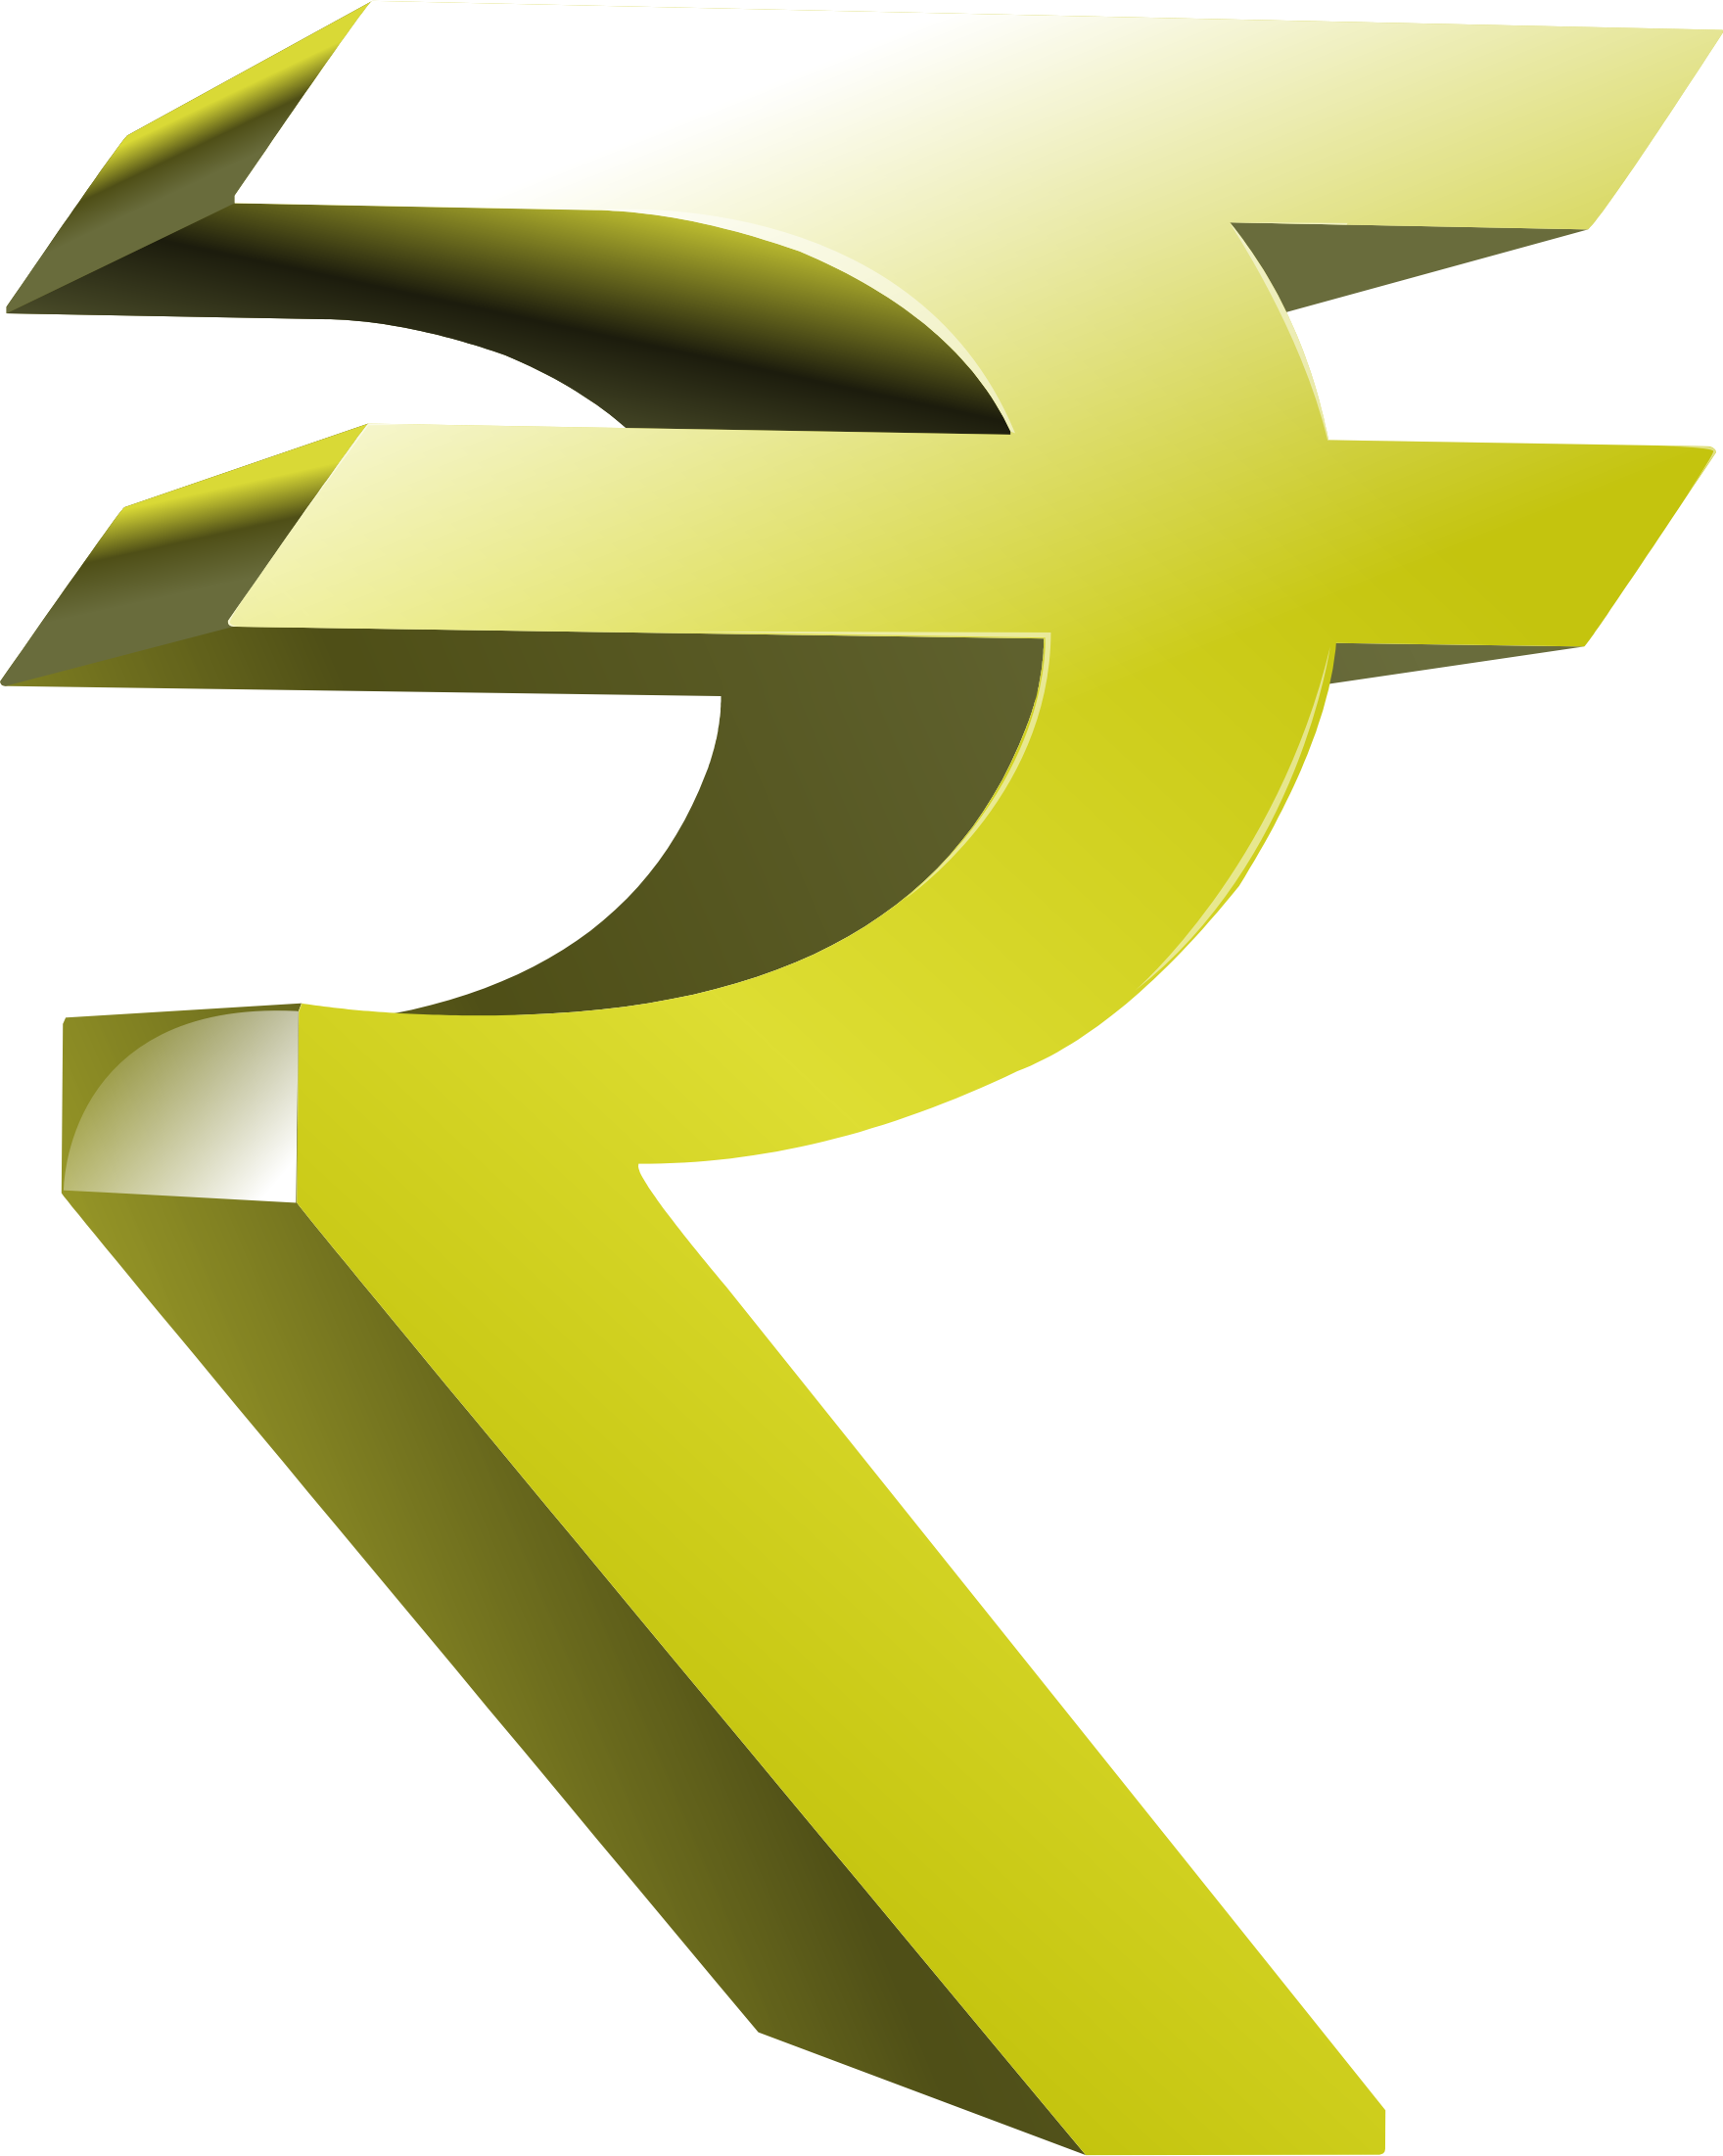 Indian clipart money. Rupee png images transparent